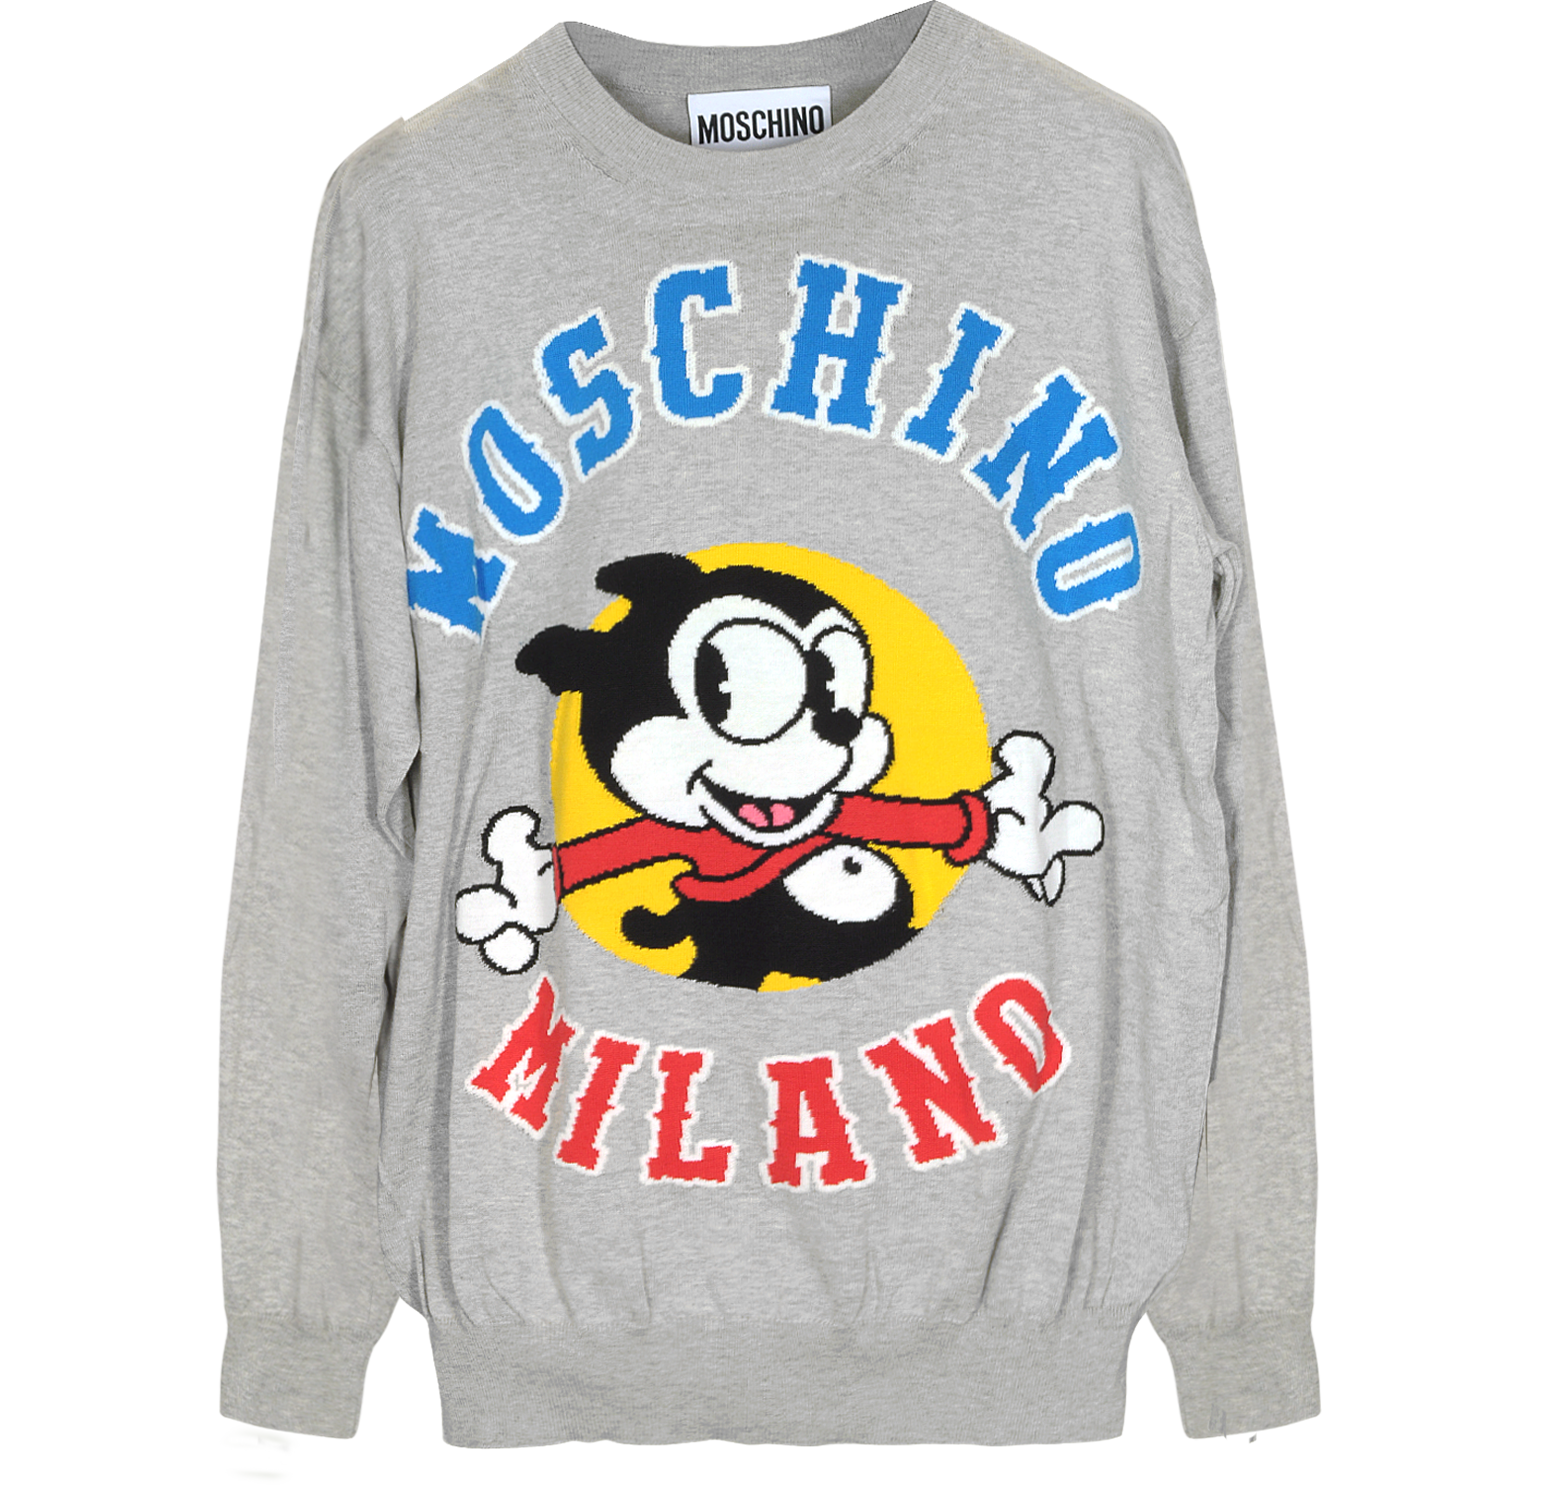 moschino grey sweater